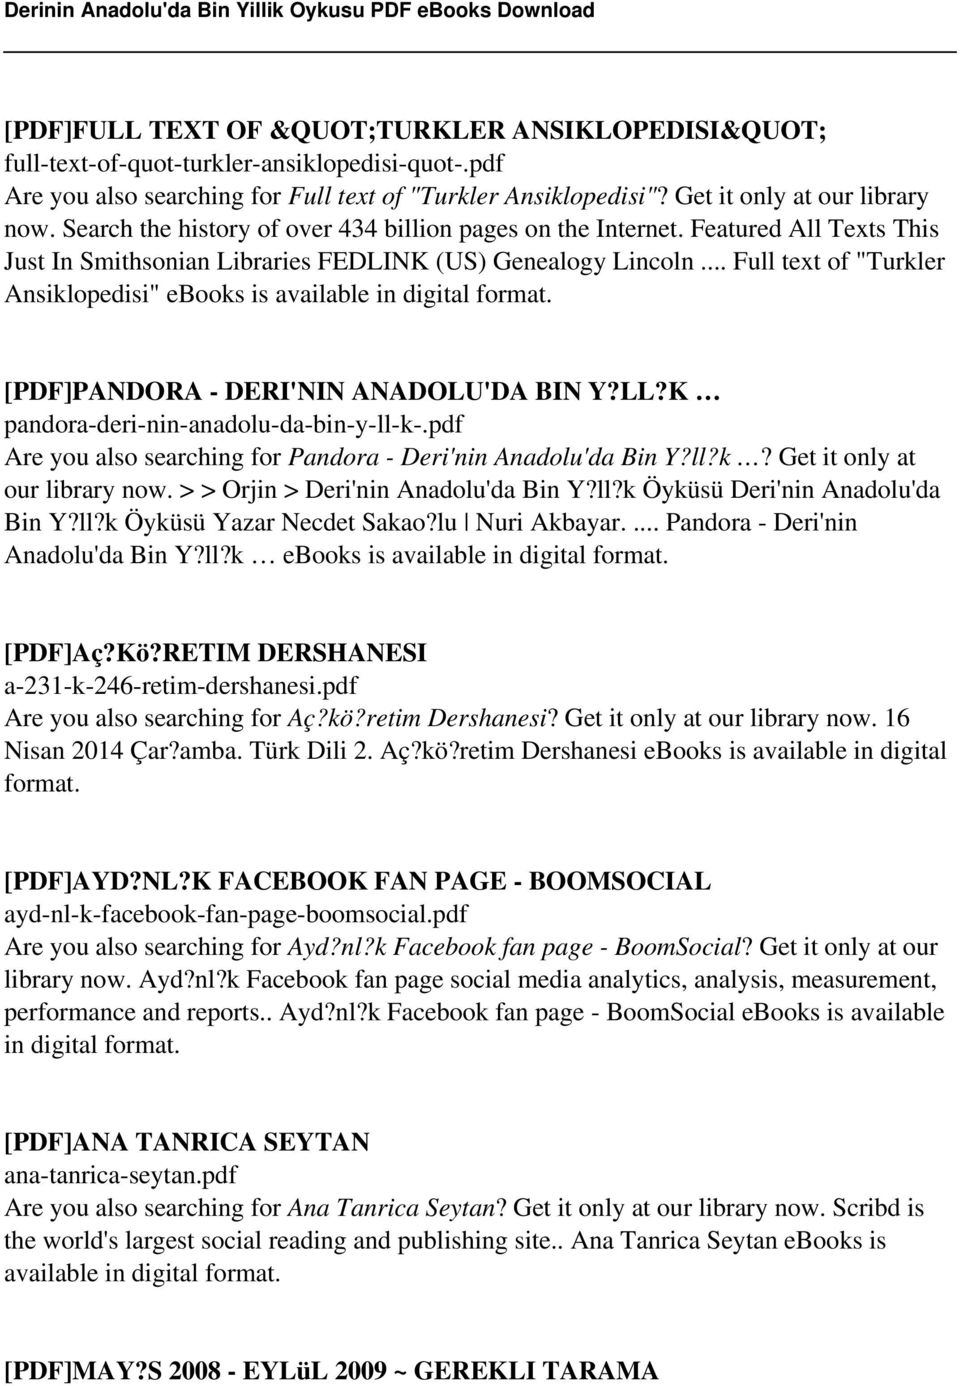 .. Full text of "Turkler Ansiklopedisi" ebooks is [PDF]PANDORA - DERI'NIN ANADOLU'DA BIN Y?LL?K pandora-deri-nin-anadolu-da-bin-y-ll-k-.